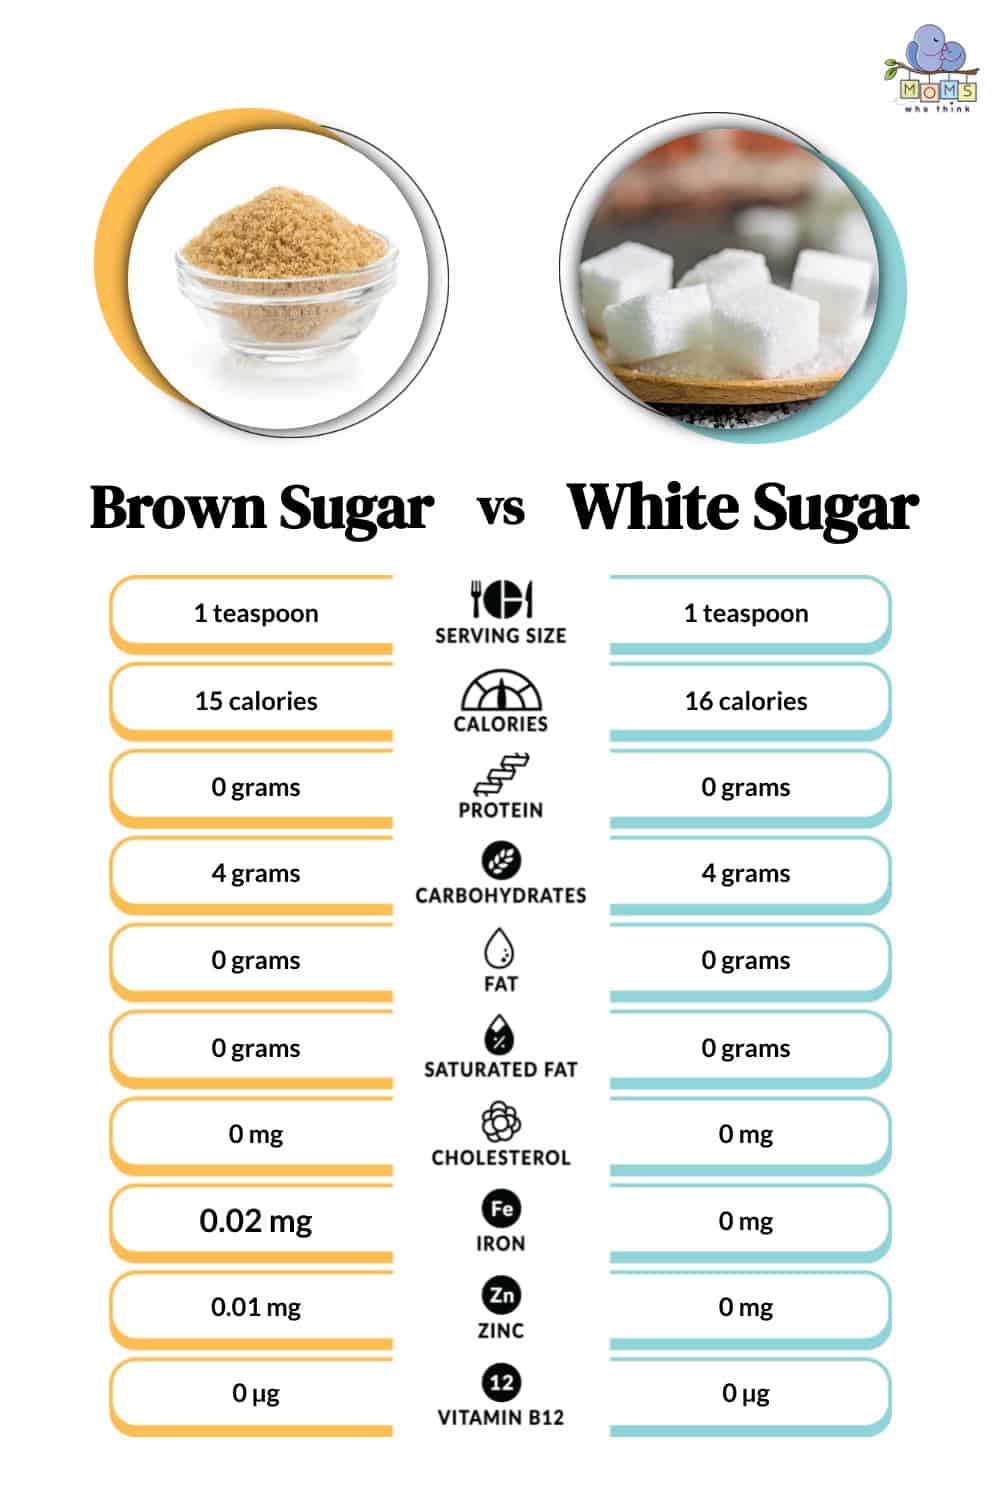 Brown Sugar vs White Sugar Nutritional Facts